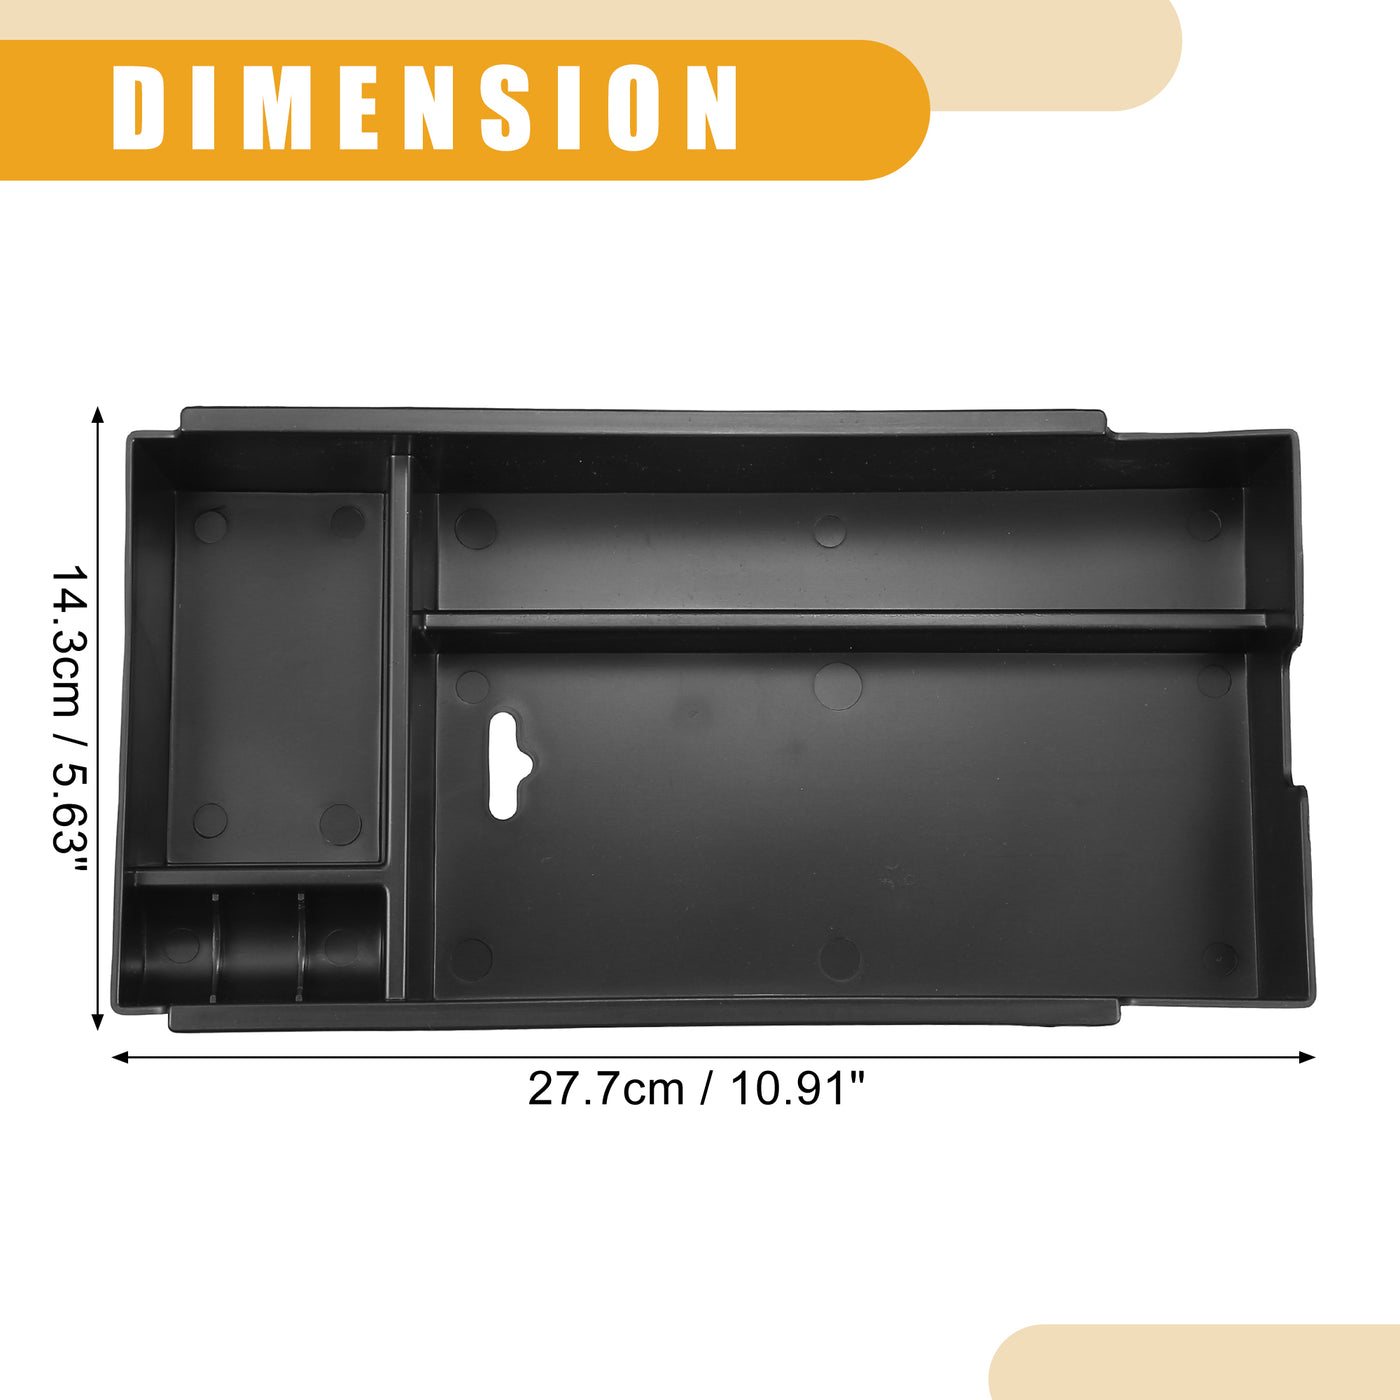 Partuto Center Console Organizer Tray - Car Front Armrest Storage Box - for Lexus E S 2013-2017 Plastic Black - 1 Pc